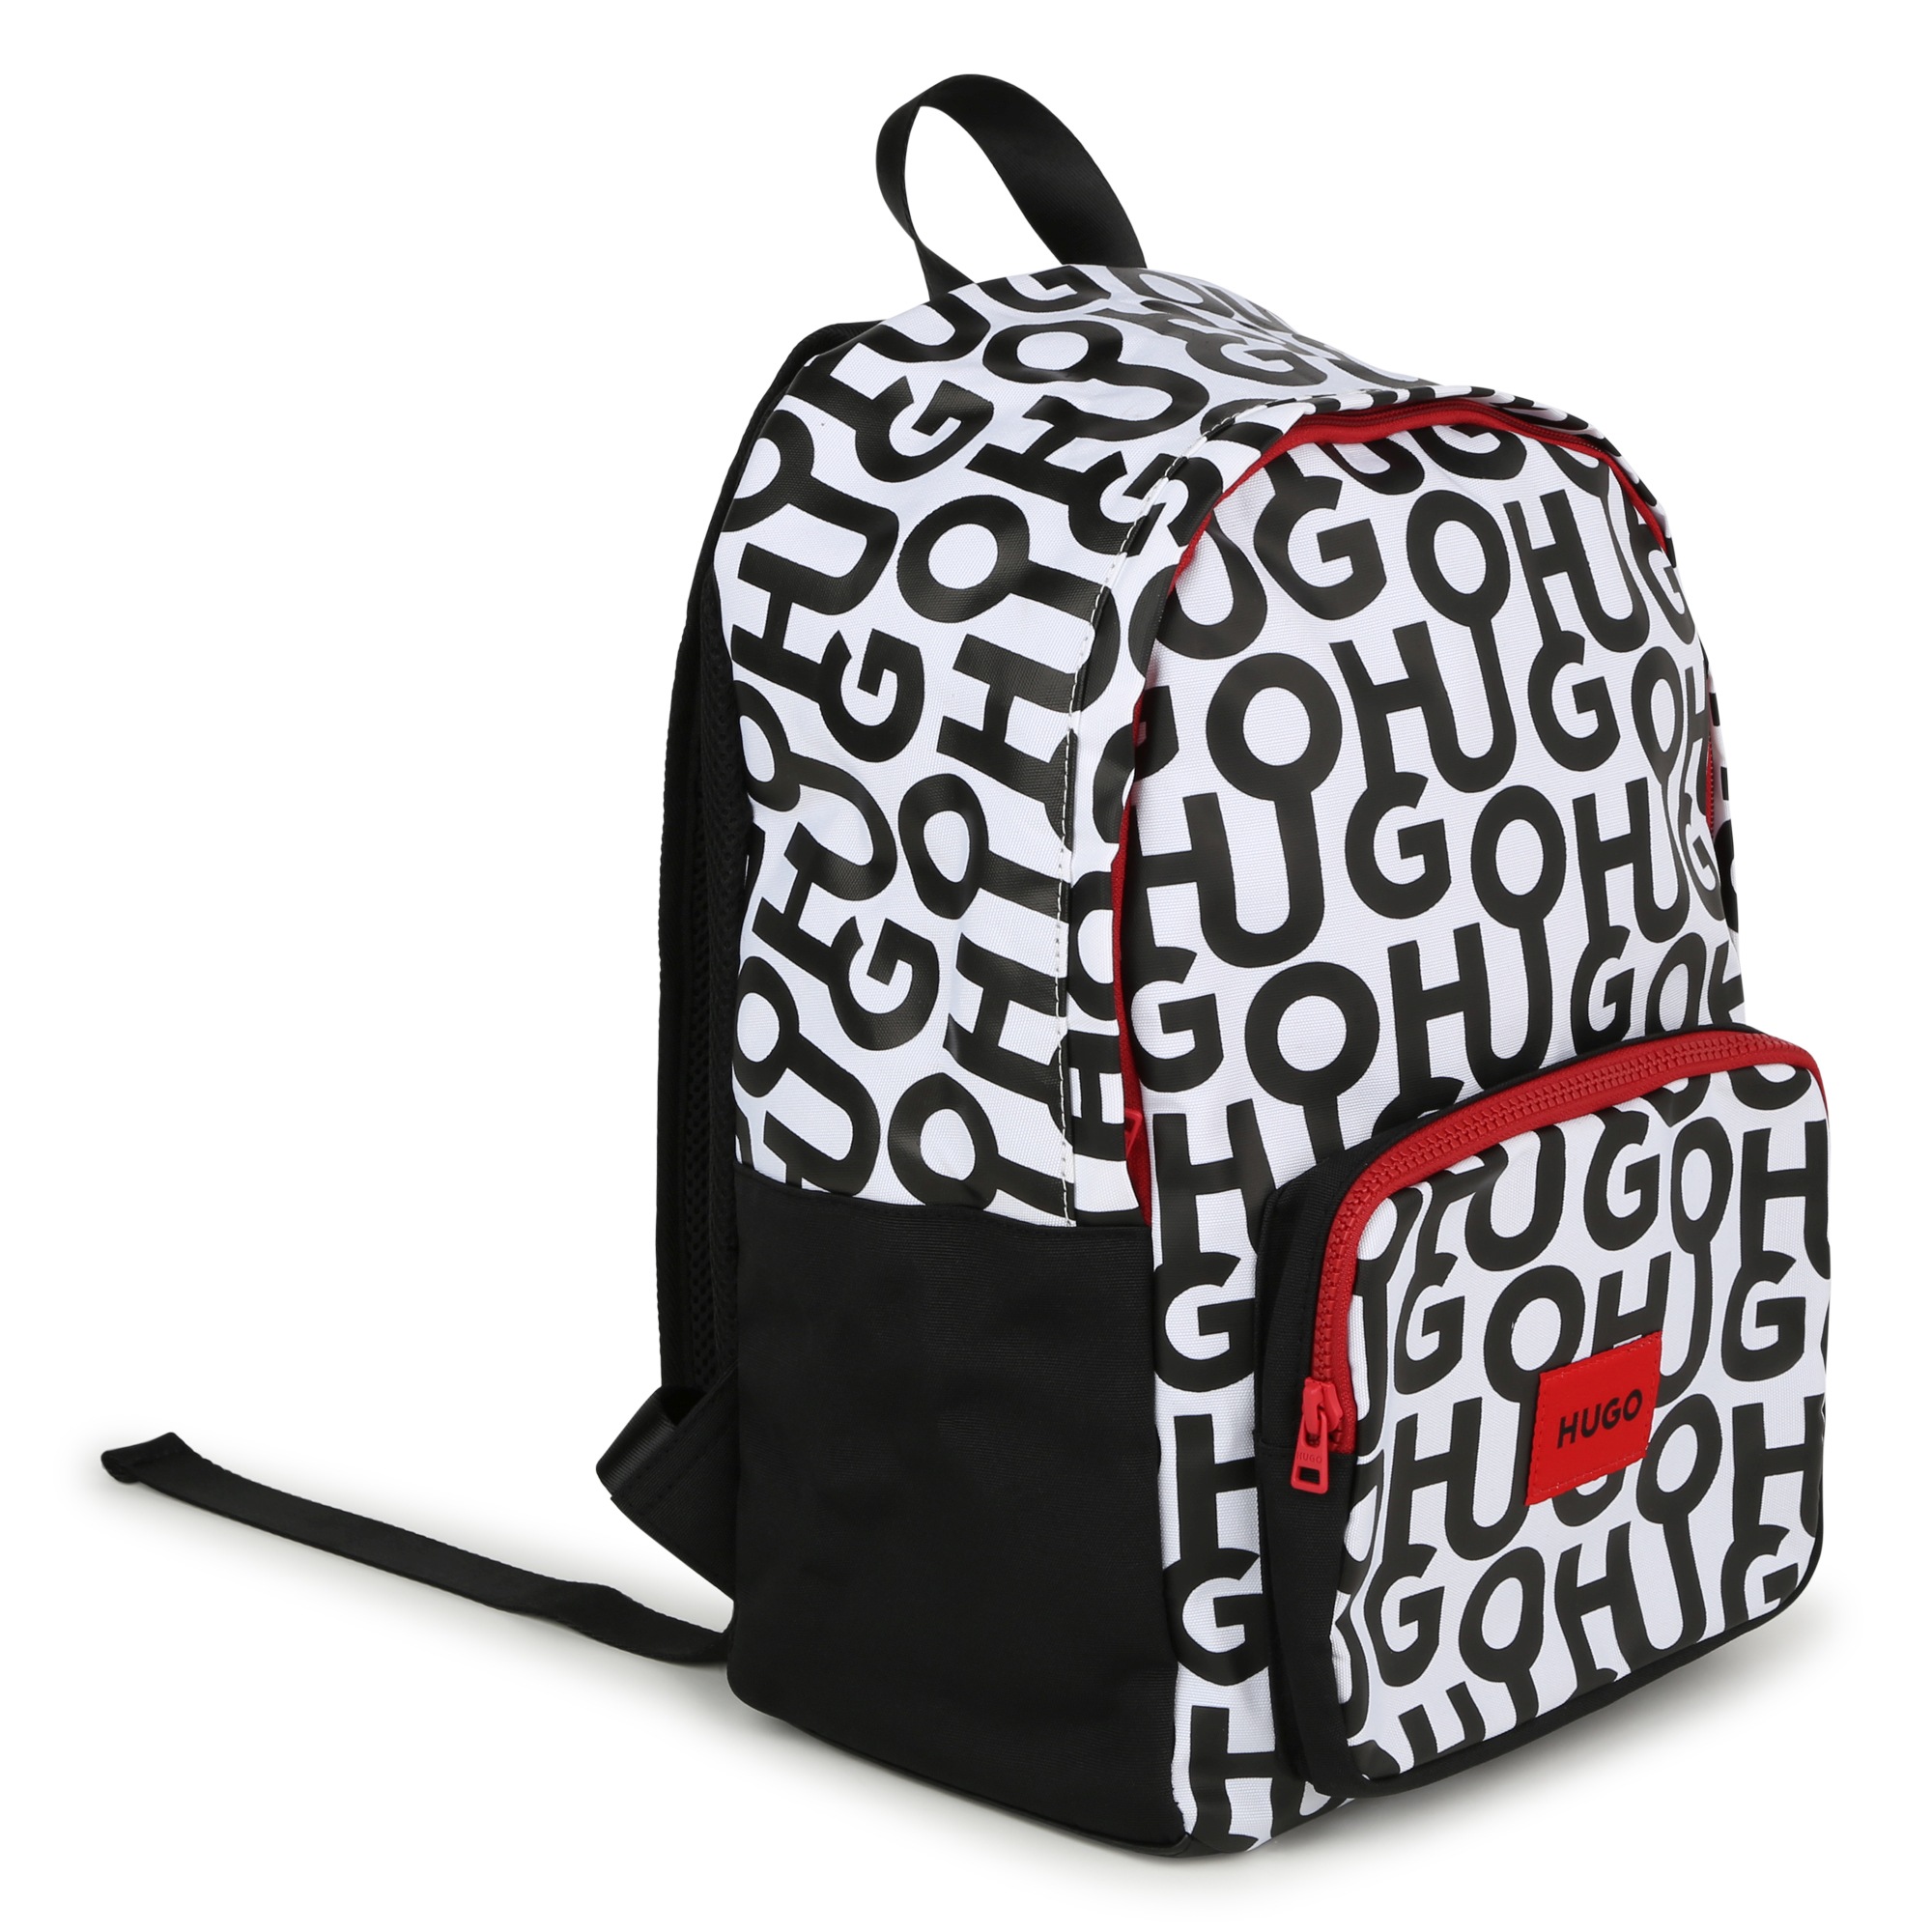 Printed backpack HUGO for UNISEX